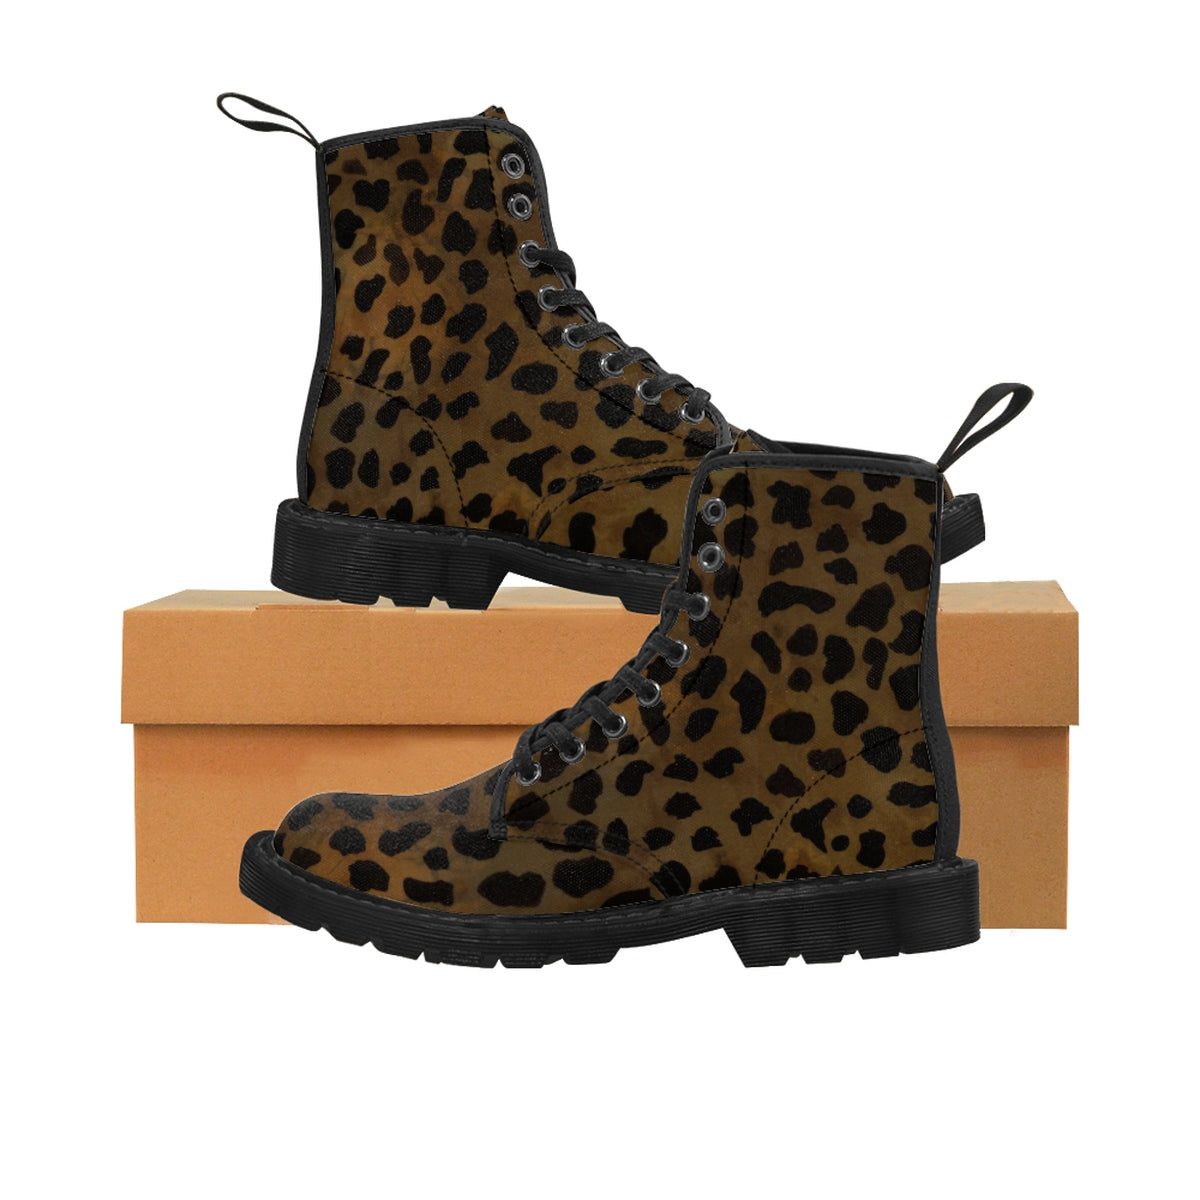 Brown Leopard Animal Print Women's Winter Laced-Up Nylon Canvas Boots (US Size: 6.5-11)-Women's Boots-Black-US 9-Heidi Kimura Art LLC Brown Leopard Women's Boots, Brown Leopard Animal Print Women's Winter Laced-Up Nylon Canvas Boots (US Size: 6.5-11)